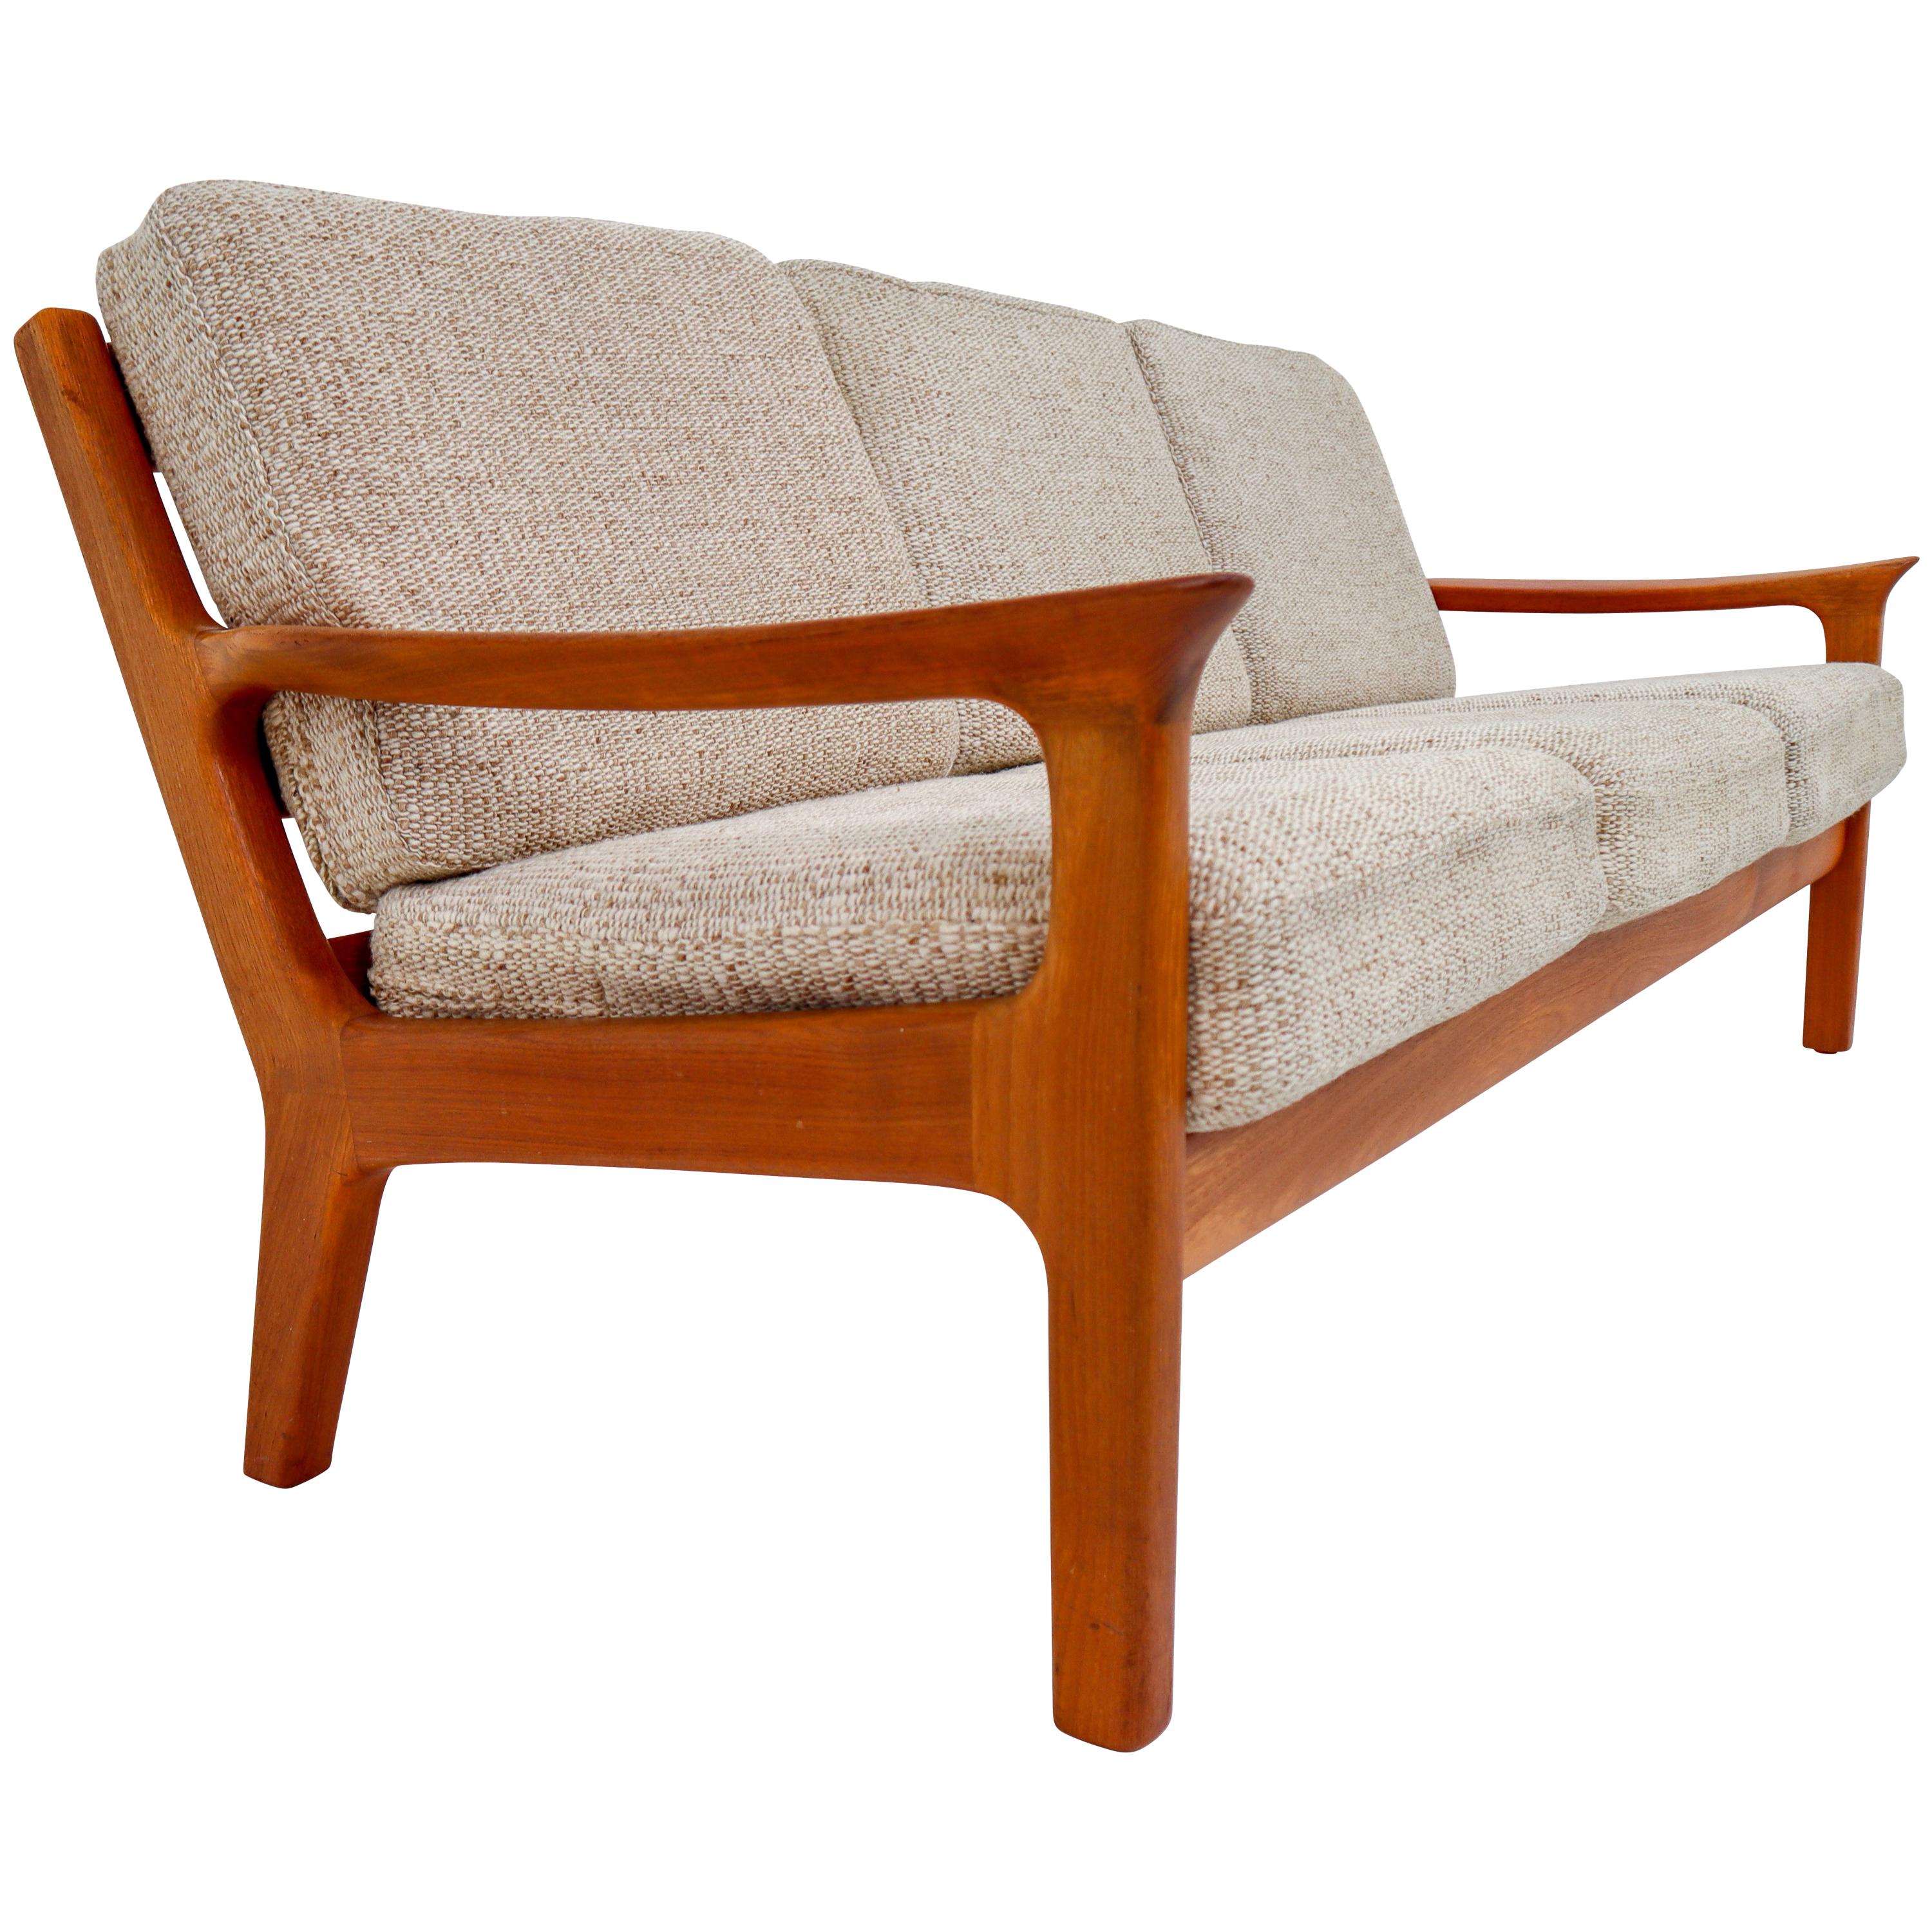 Three-Seat Sofa in Teak by Juul Kristensen and Glostrup Furniture, 1960s